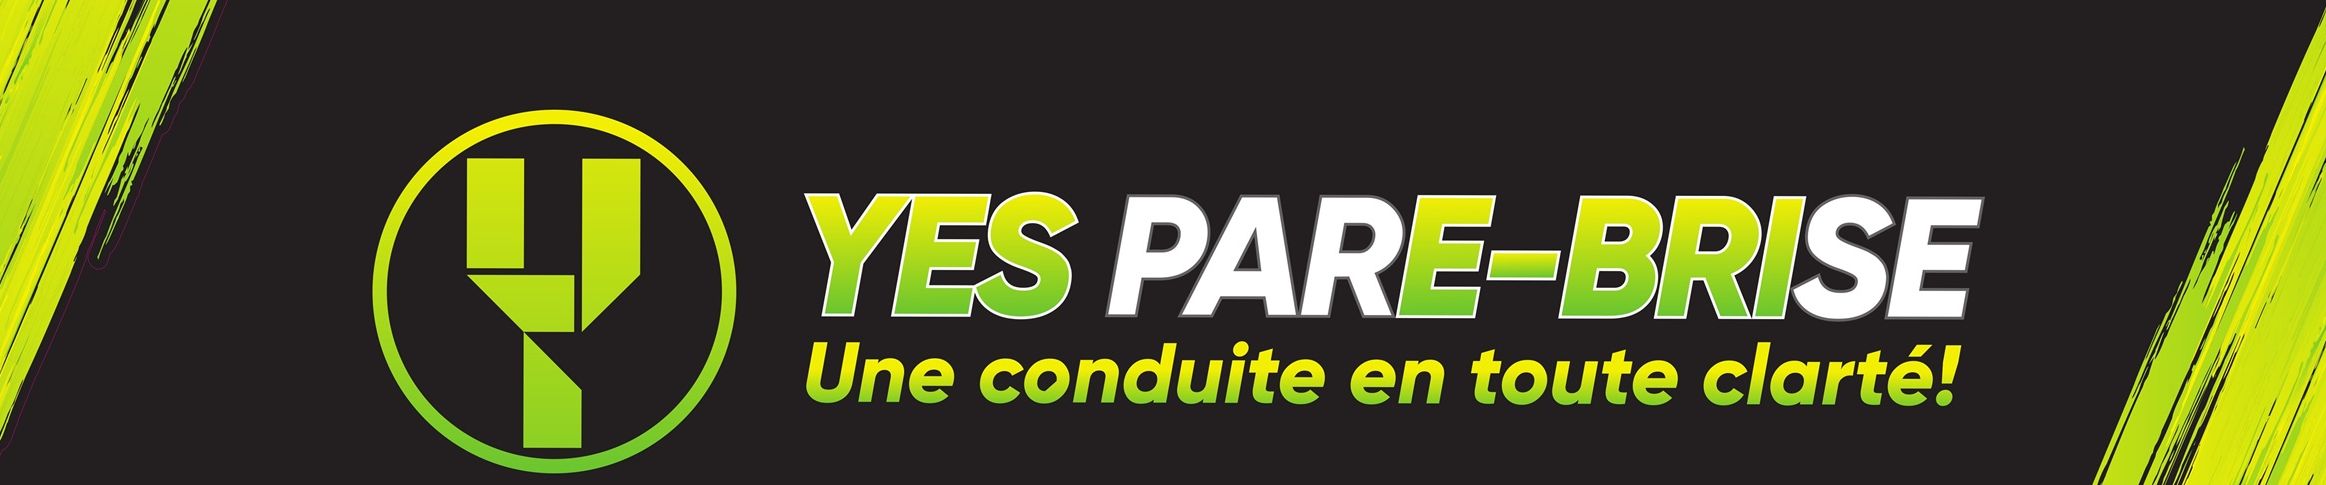 logo yes-pare-brise Saint-Quentin 02100